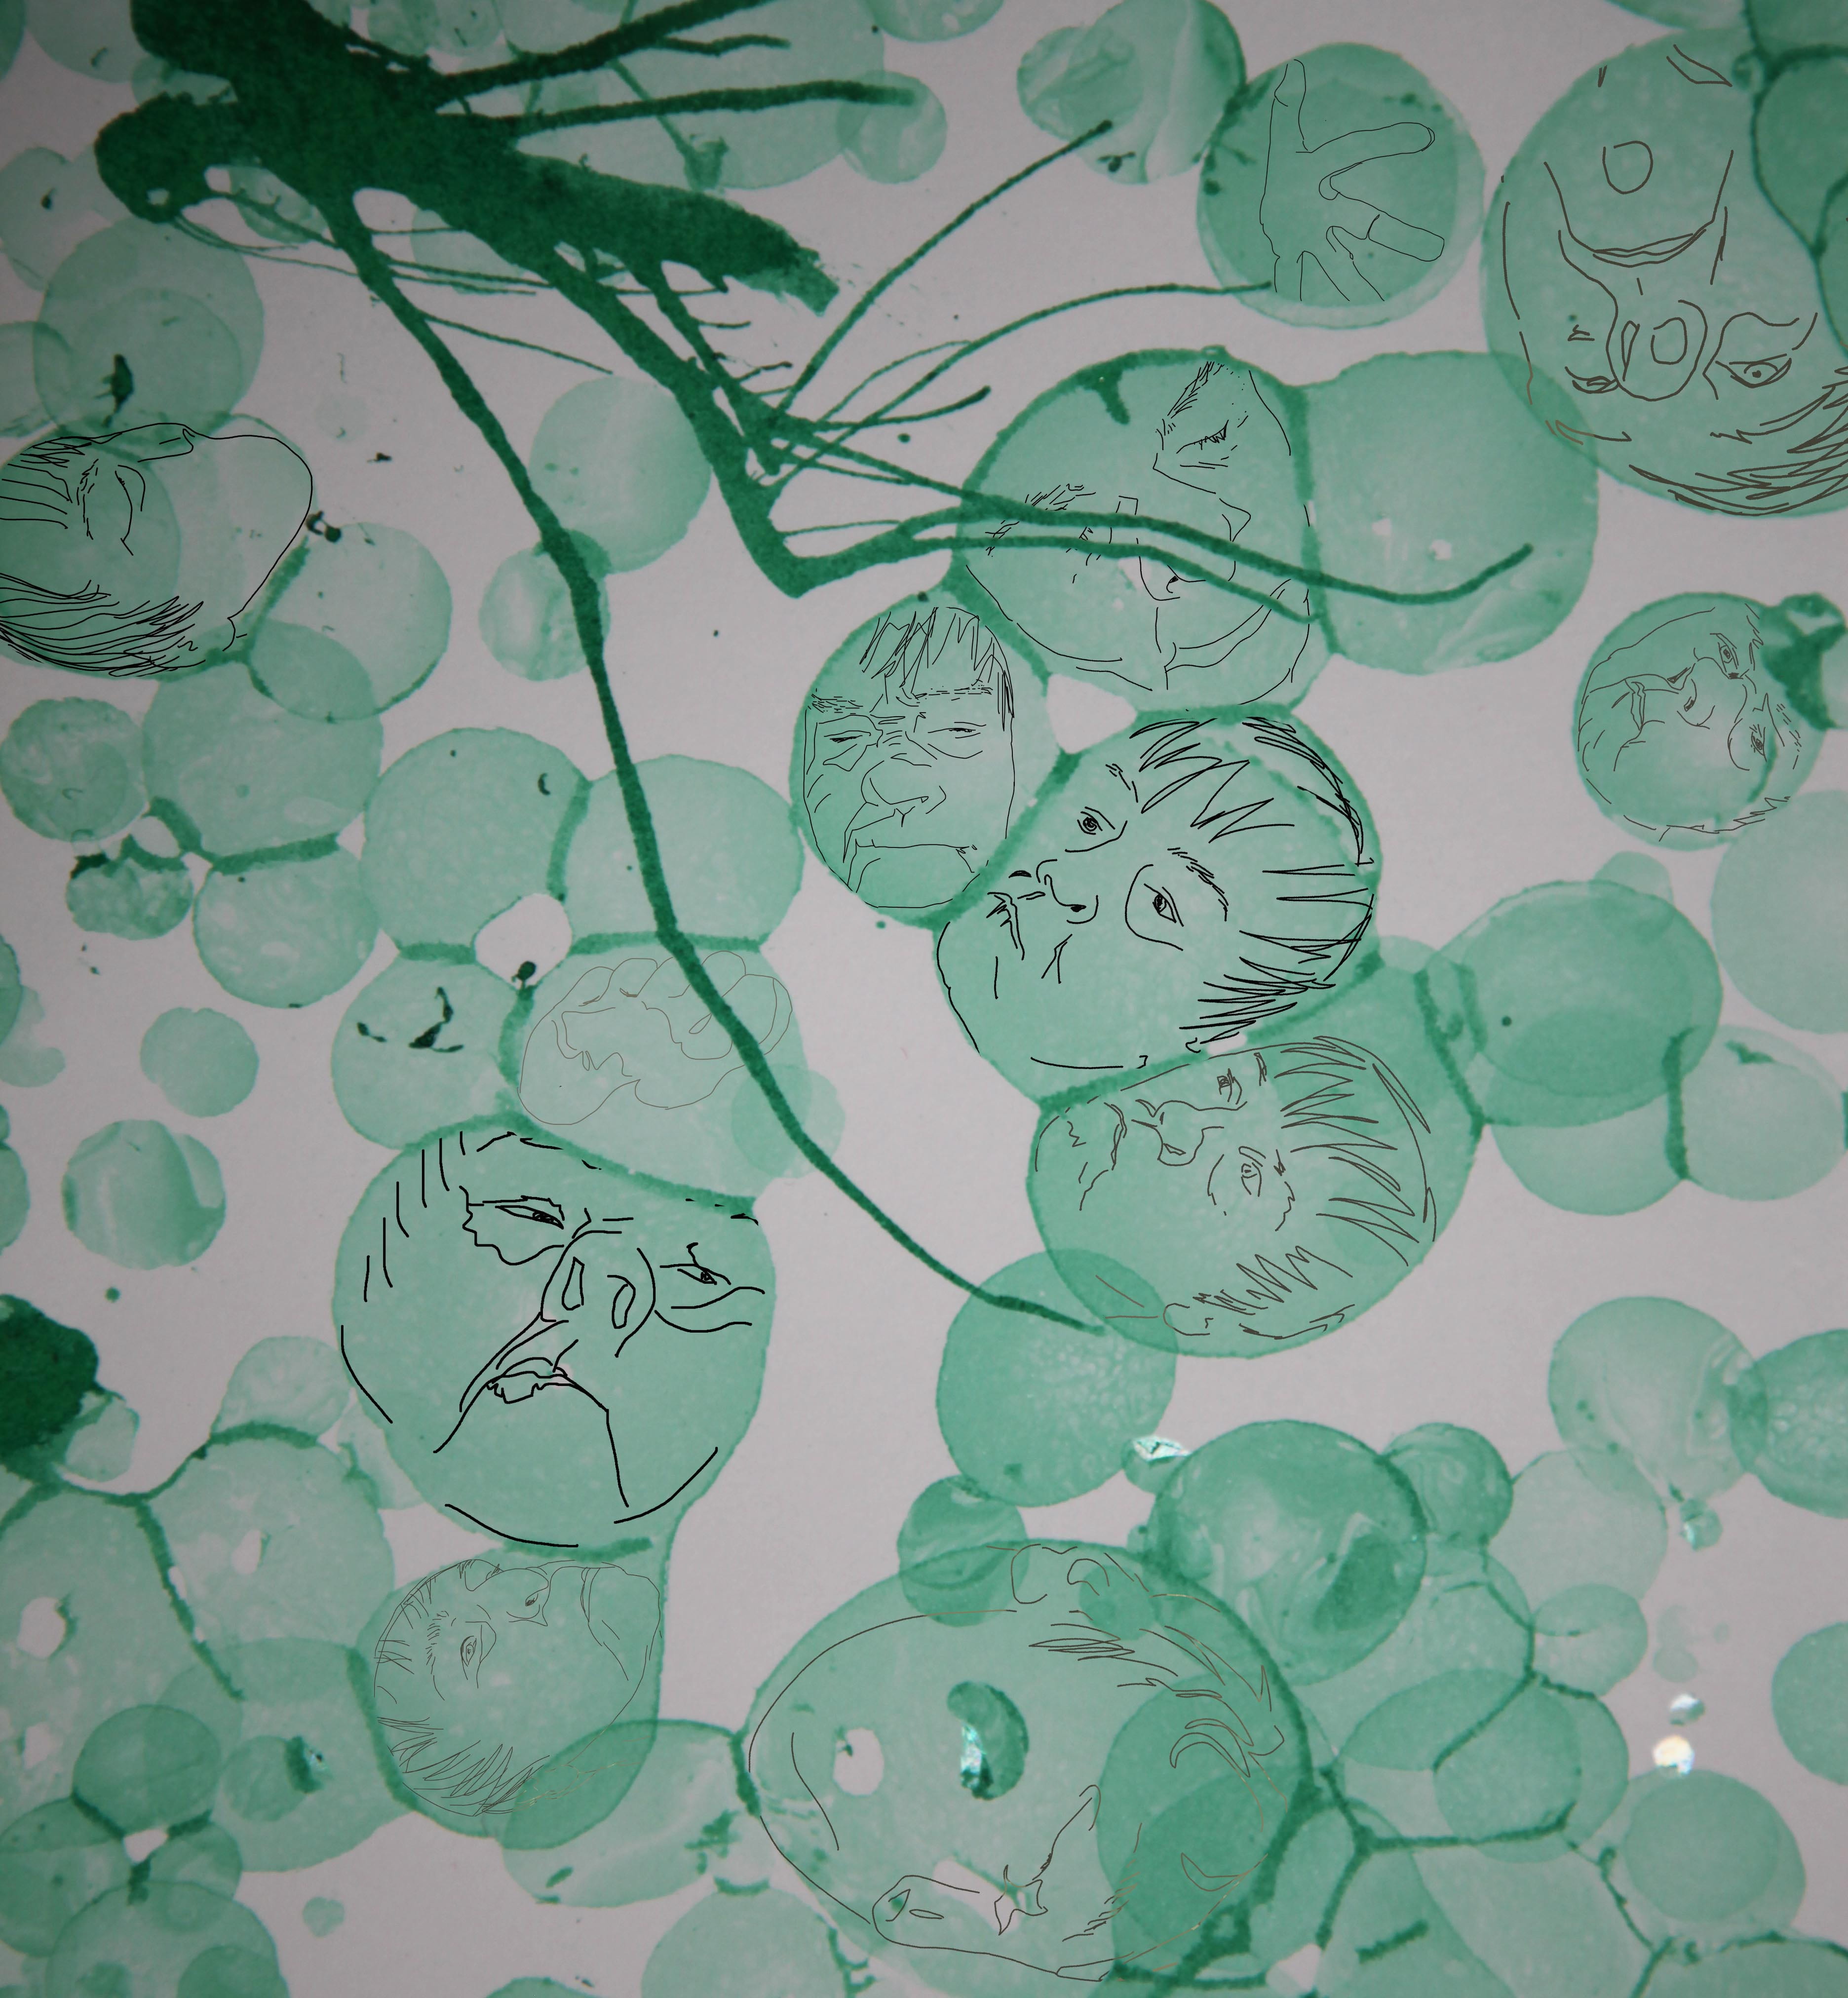 Faces drawn into green bubbles.